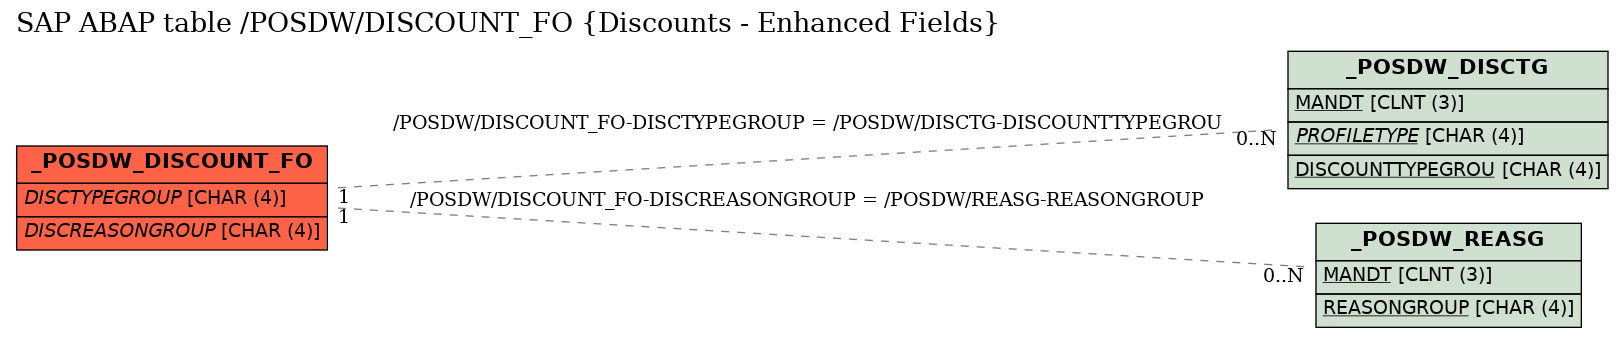 E-R Diagram for table /POSDW/DISCOUNT_FO (Discounts - Enhanced Fields)